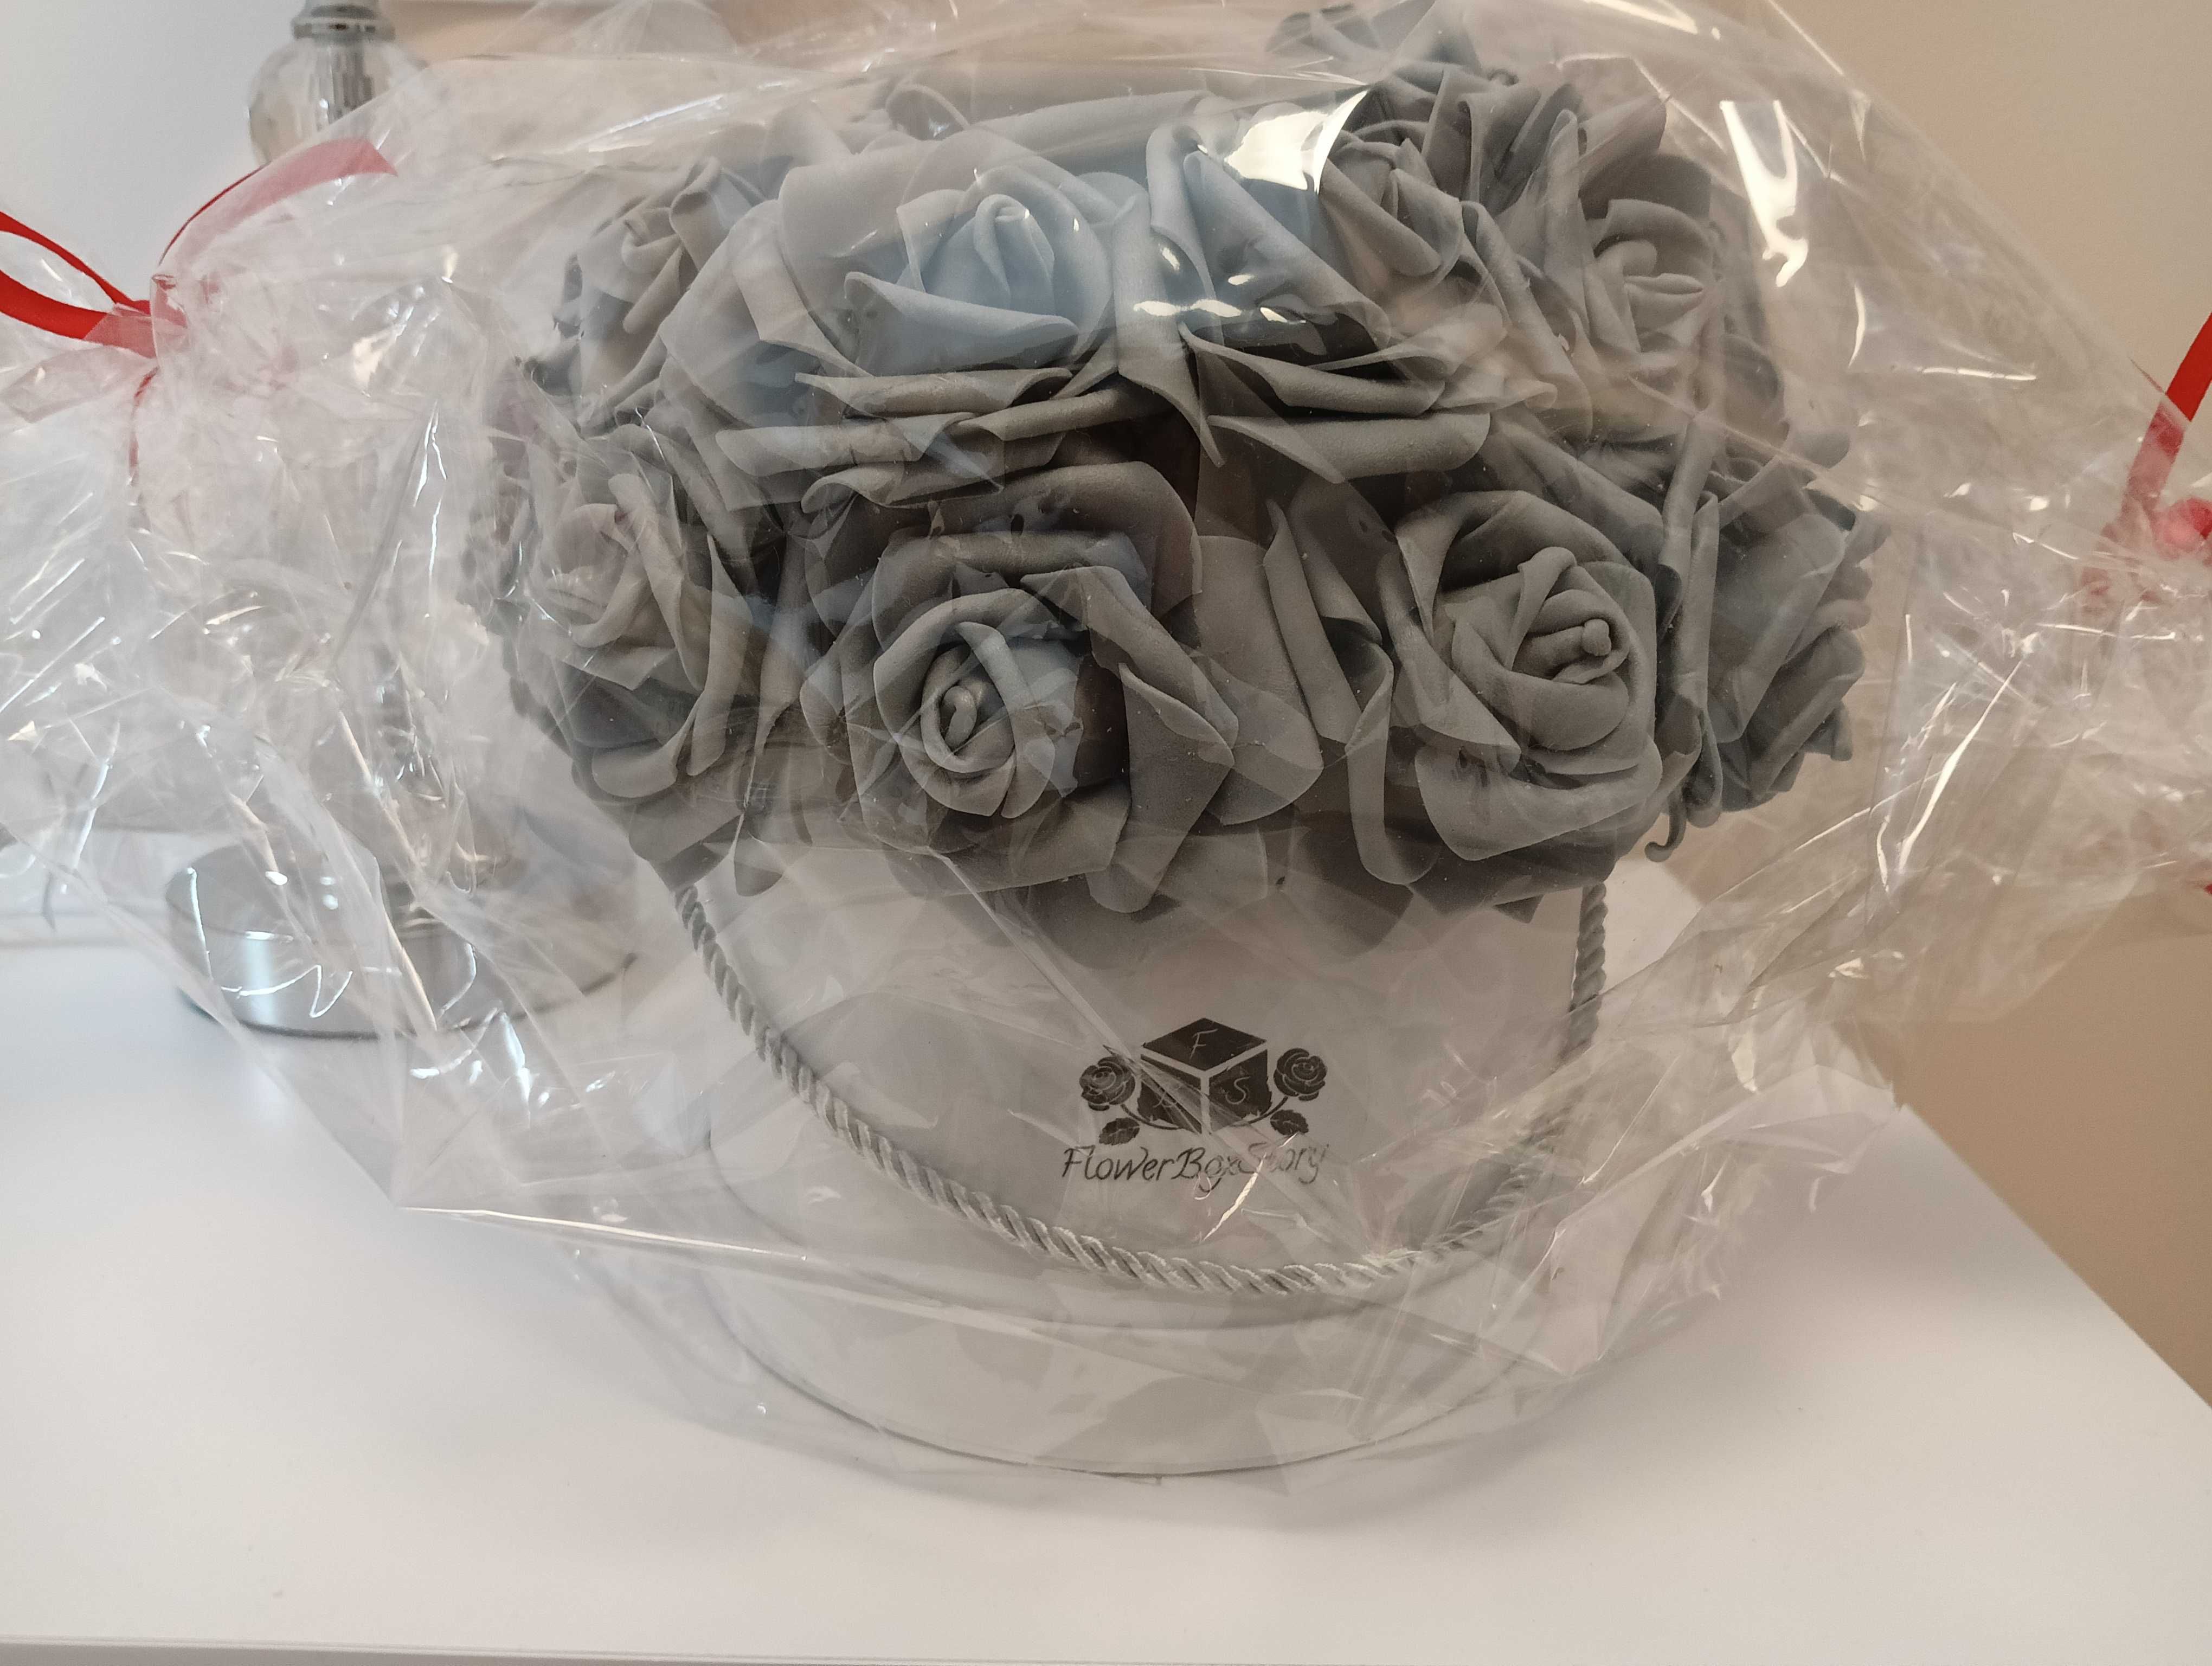 Flowerbox -szare róże